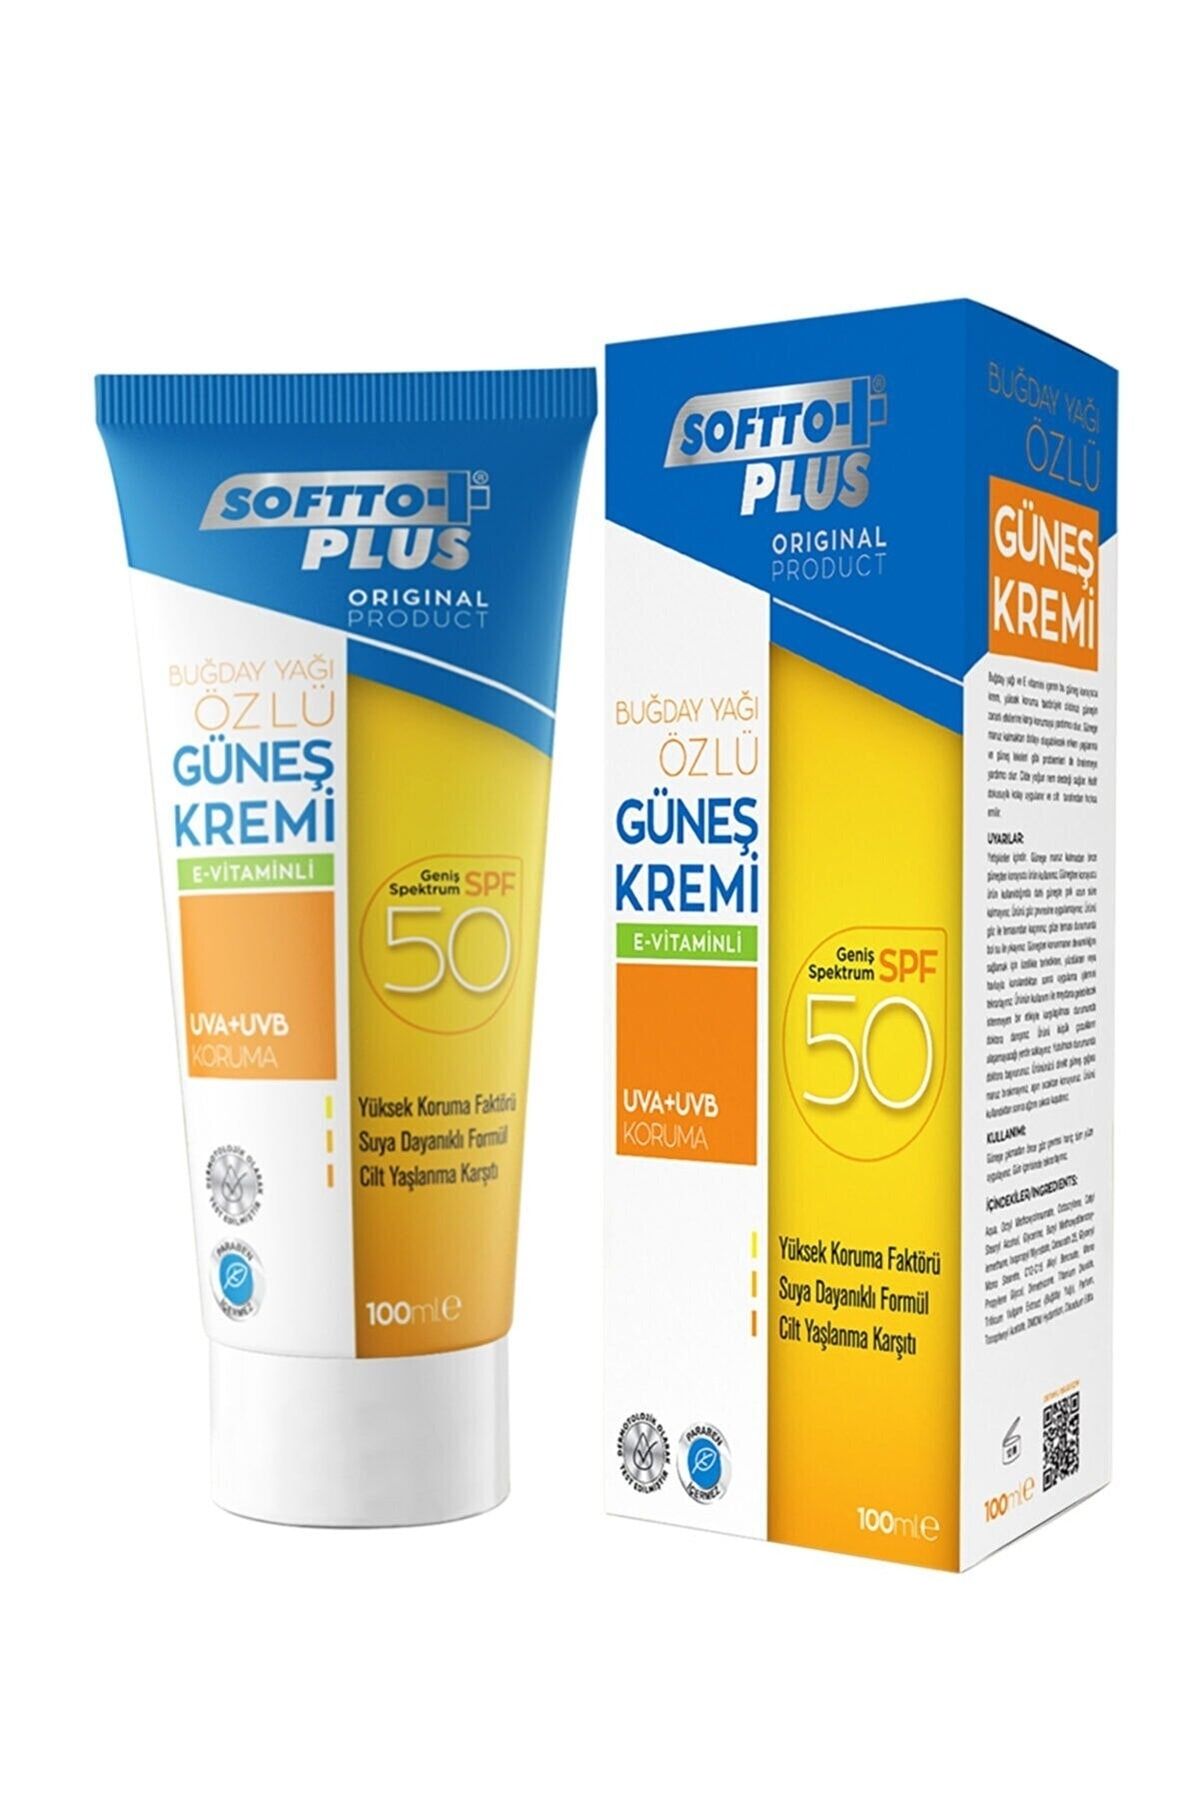 Softto Plus Buğday Yağı Özlü Güneş Kremi E-Vitaminli 50spf 100ml